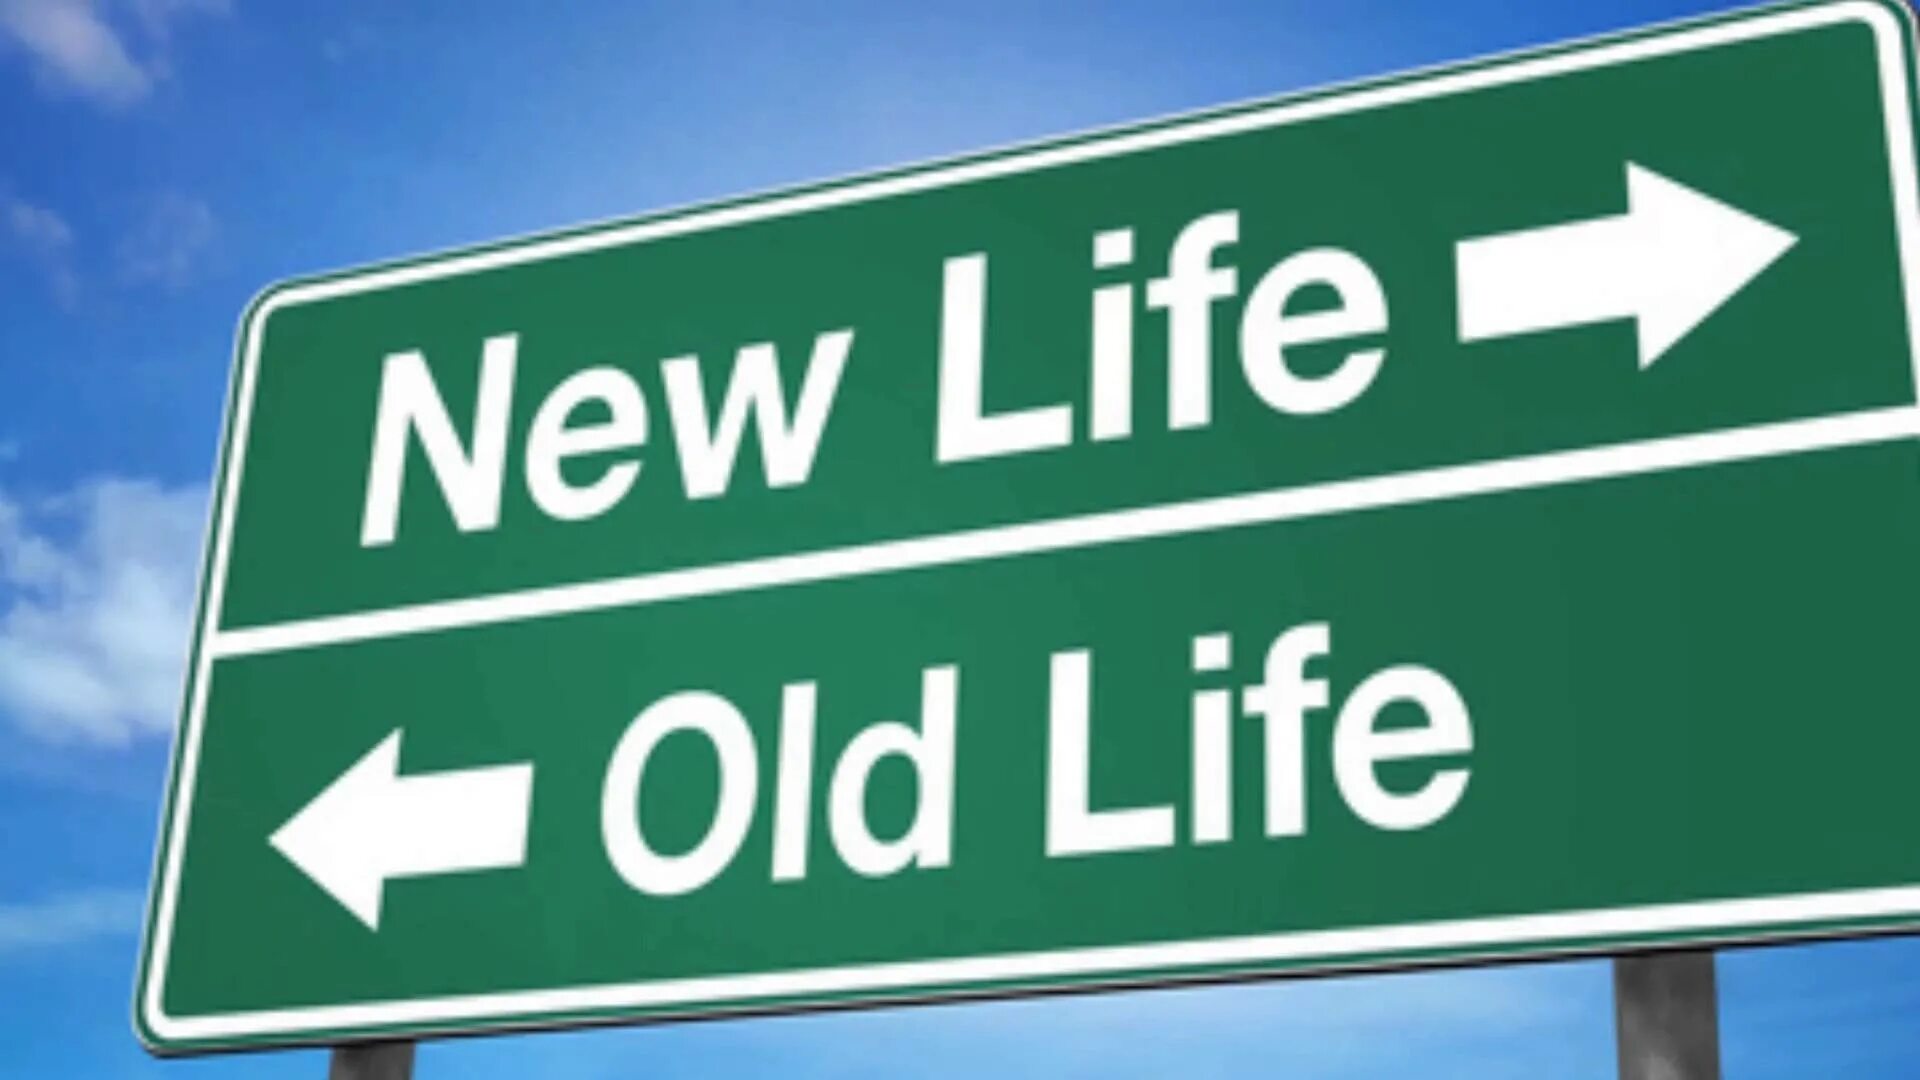 The New Life. New Life фото расположения. Фото новая жизнь по английски. Great New Life. Get new life